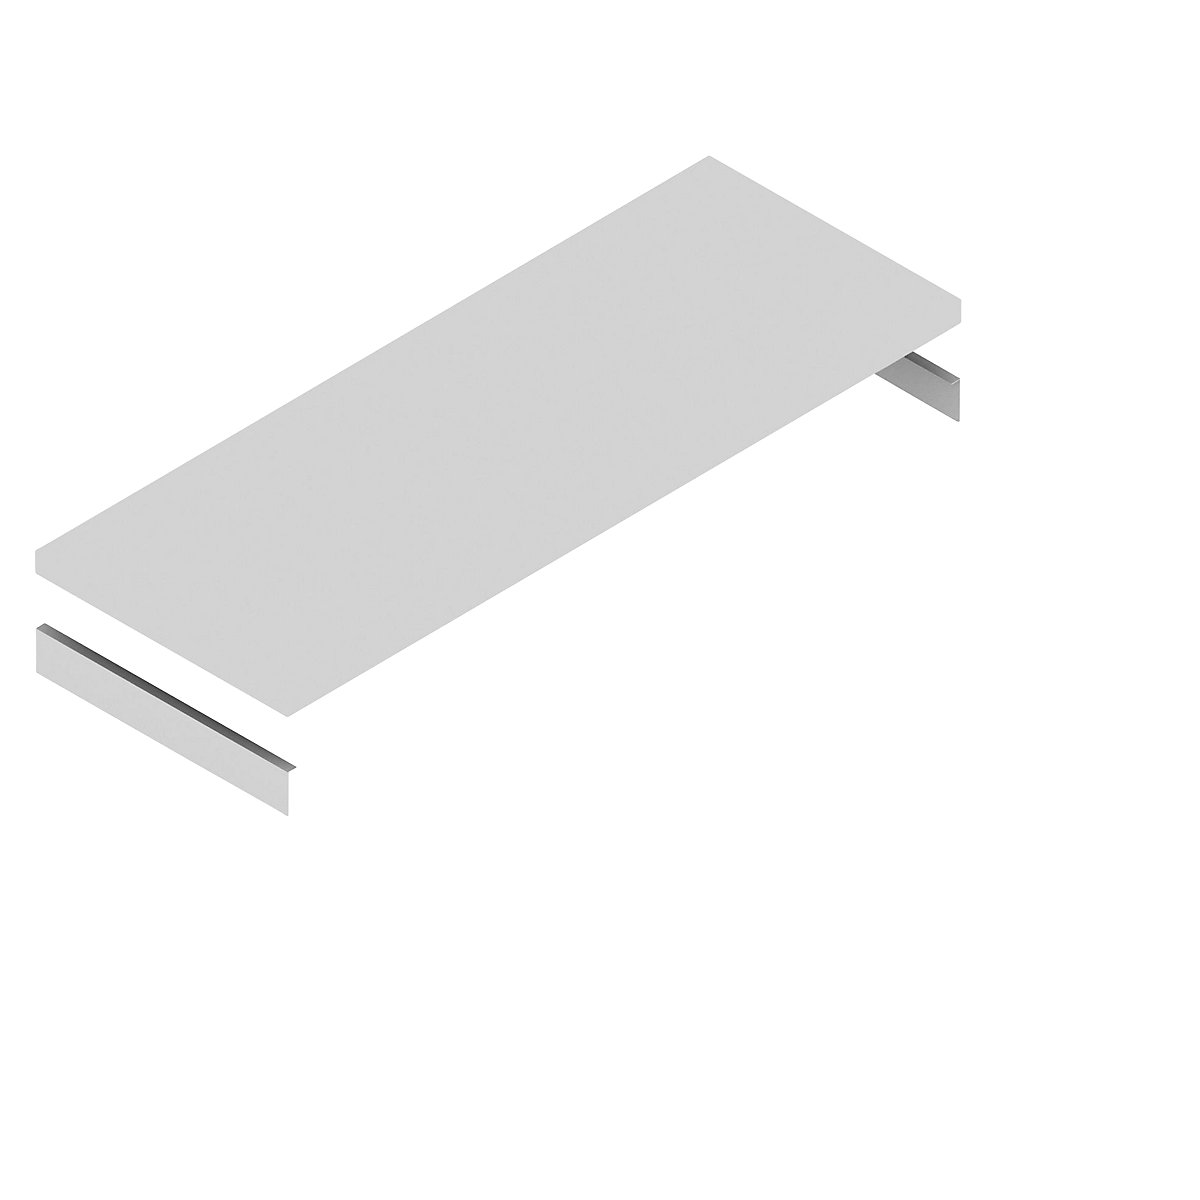 Shelf, incl. support beams – hofe, zinc plated, WxD 1325 x 500 mm